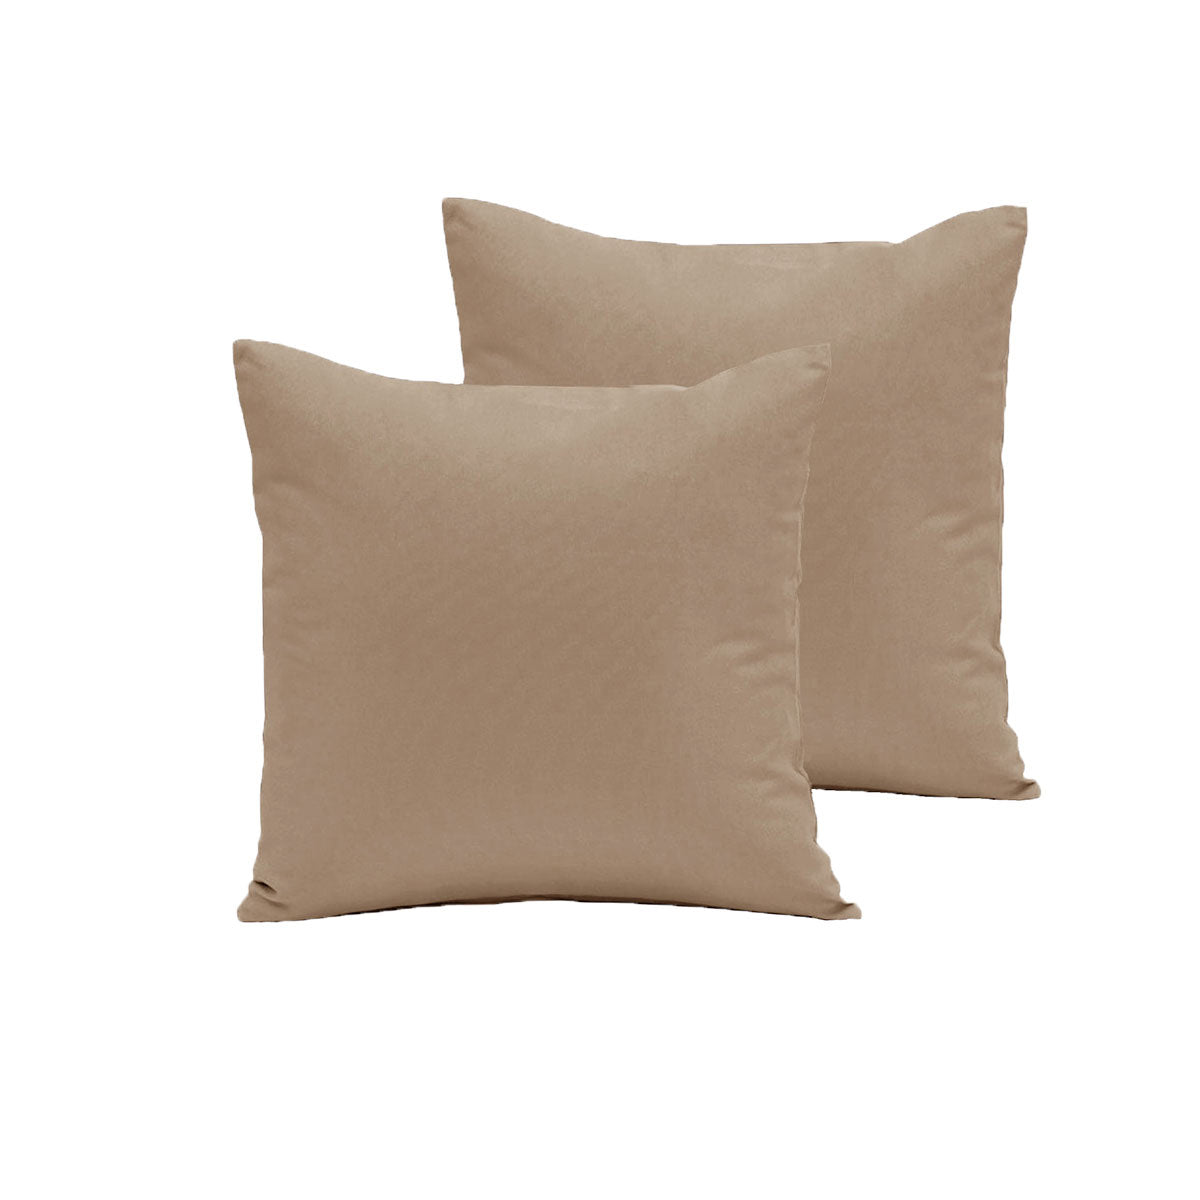 Pair of Polyester Cotton European Pillowcases Linen